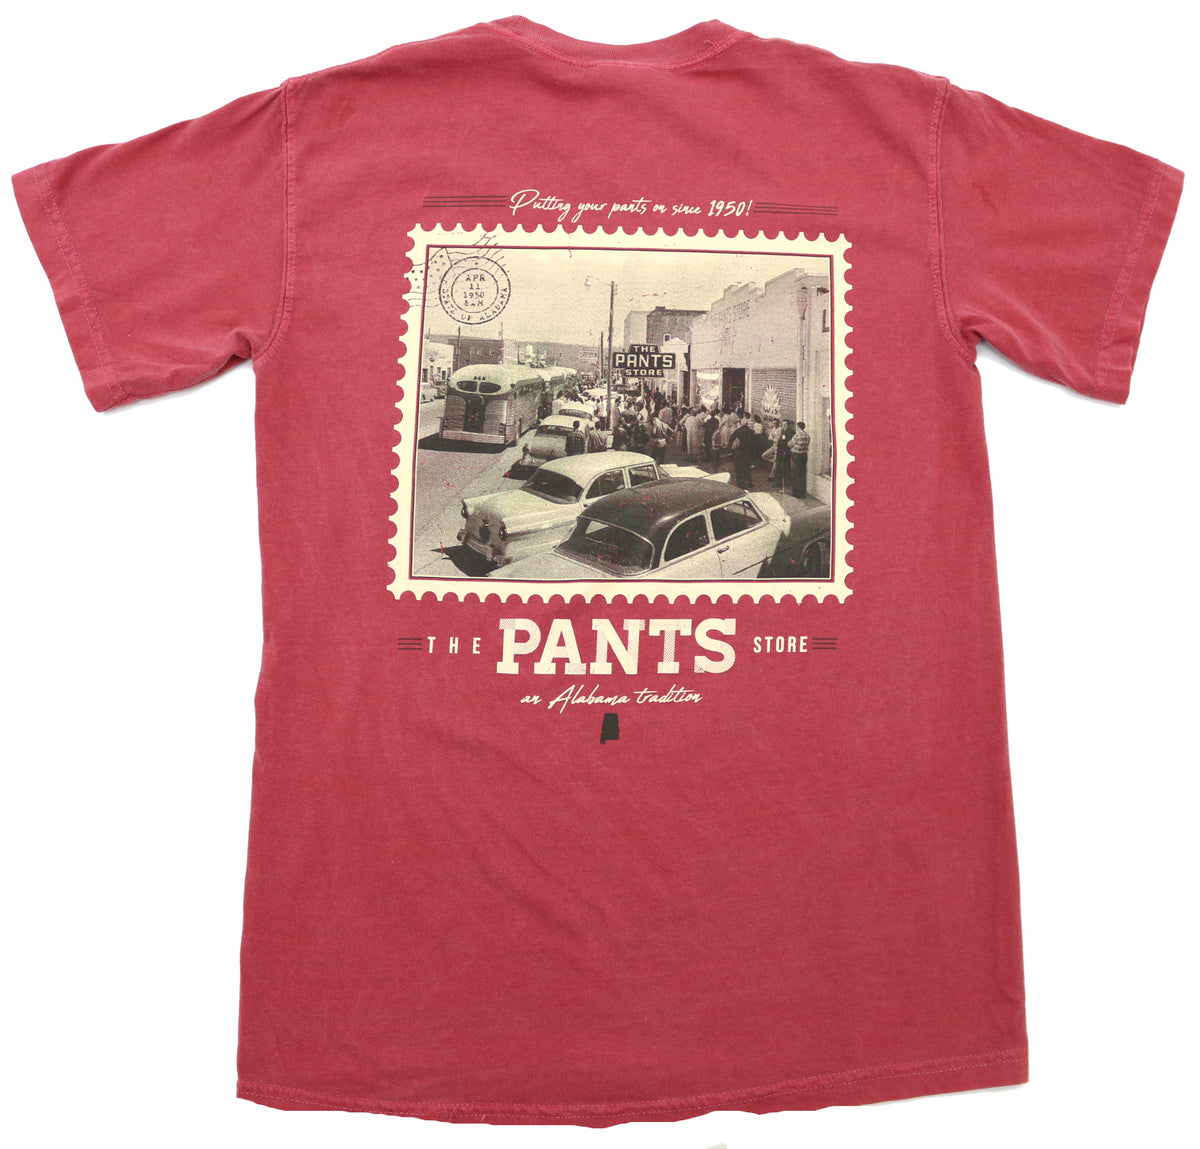 Pants Store Since 1950 Tee Shirt